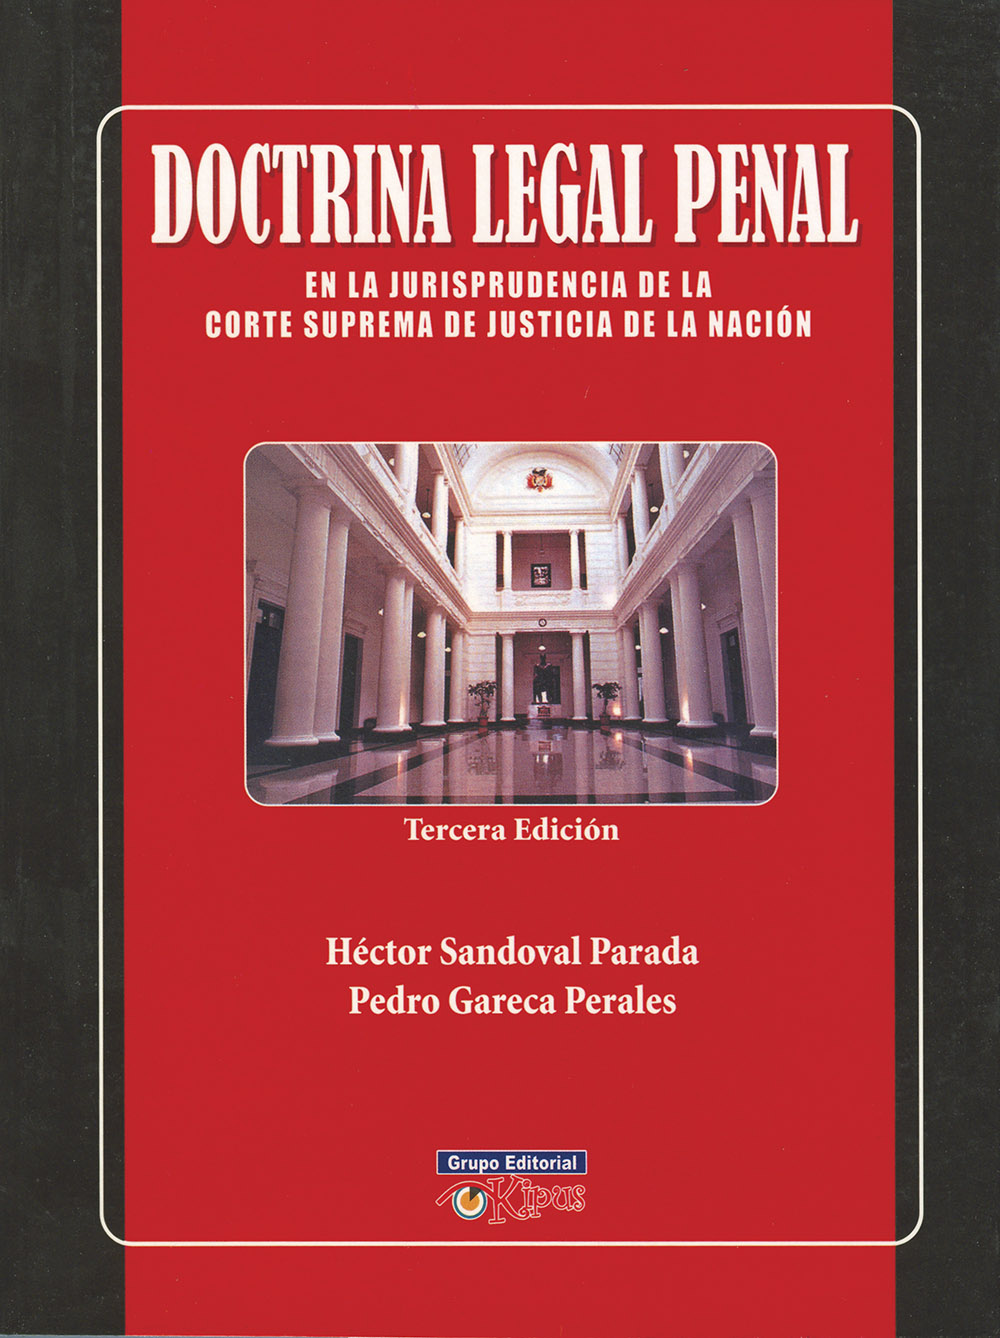 doctrina-legal-penal-grupo-editorial-kipus